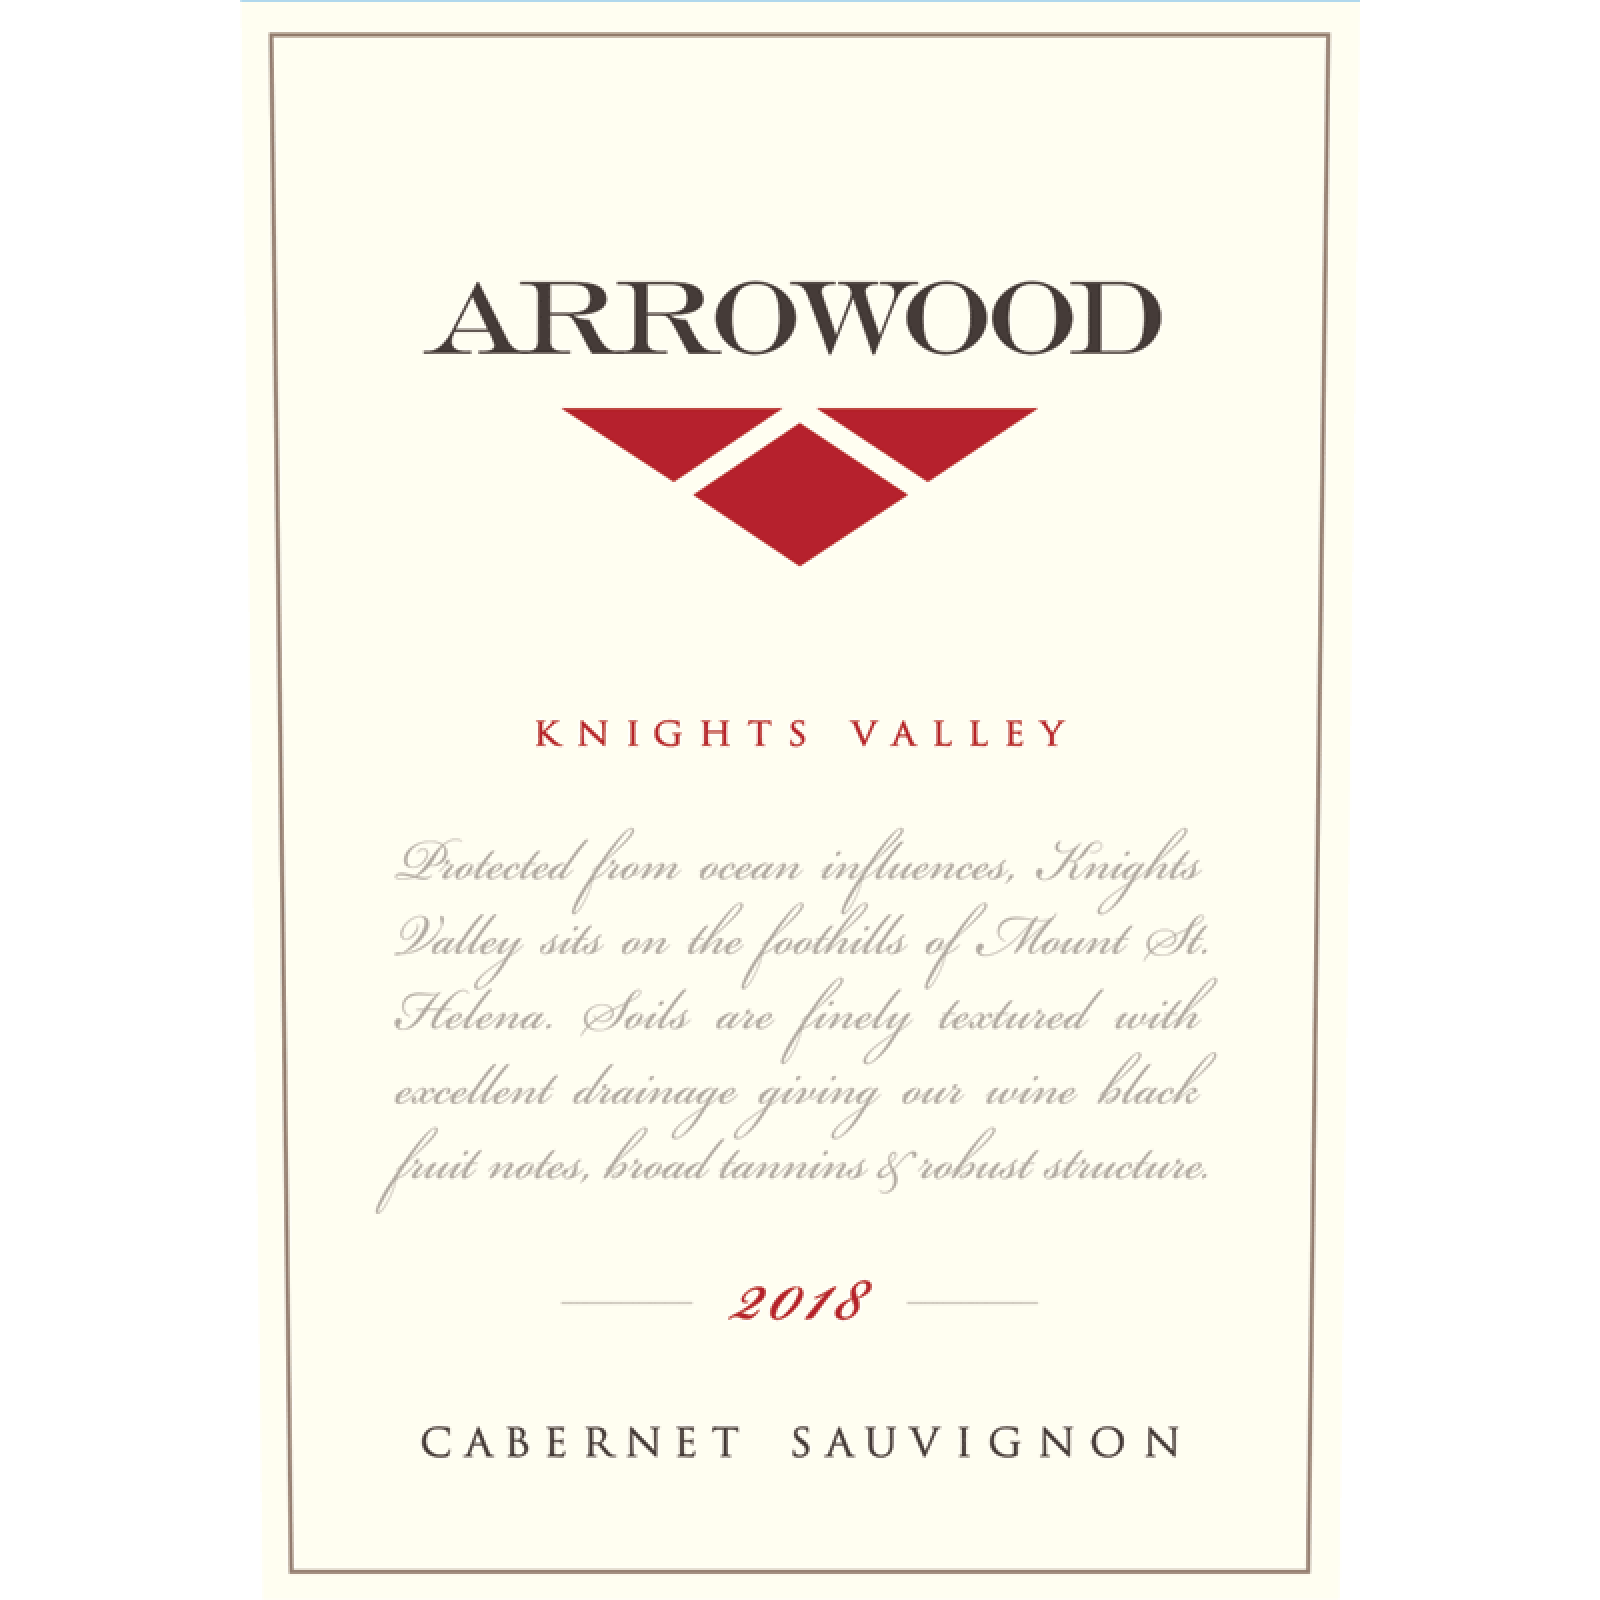 Arrowood Knights Valley Cab 2018